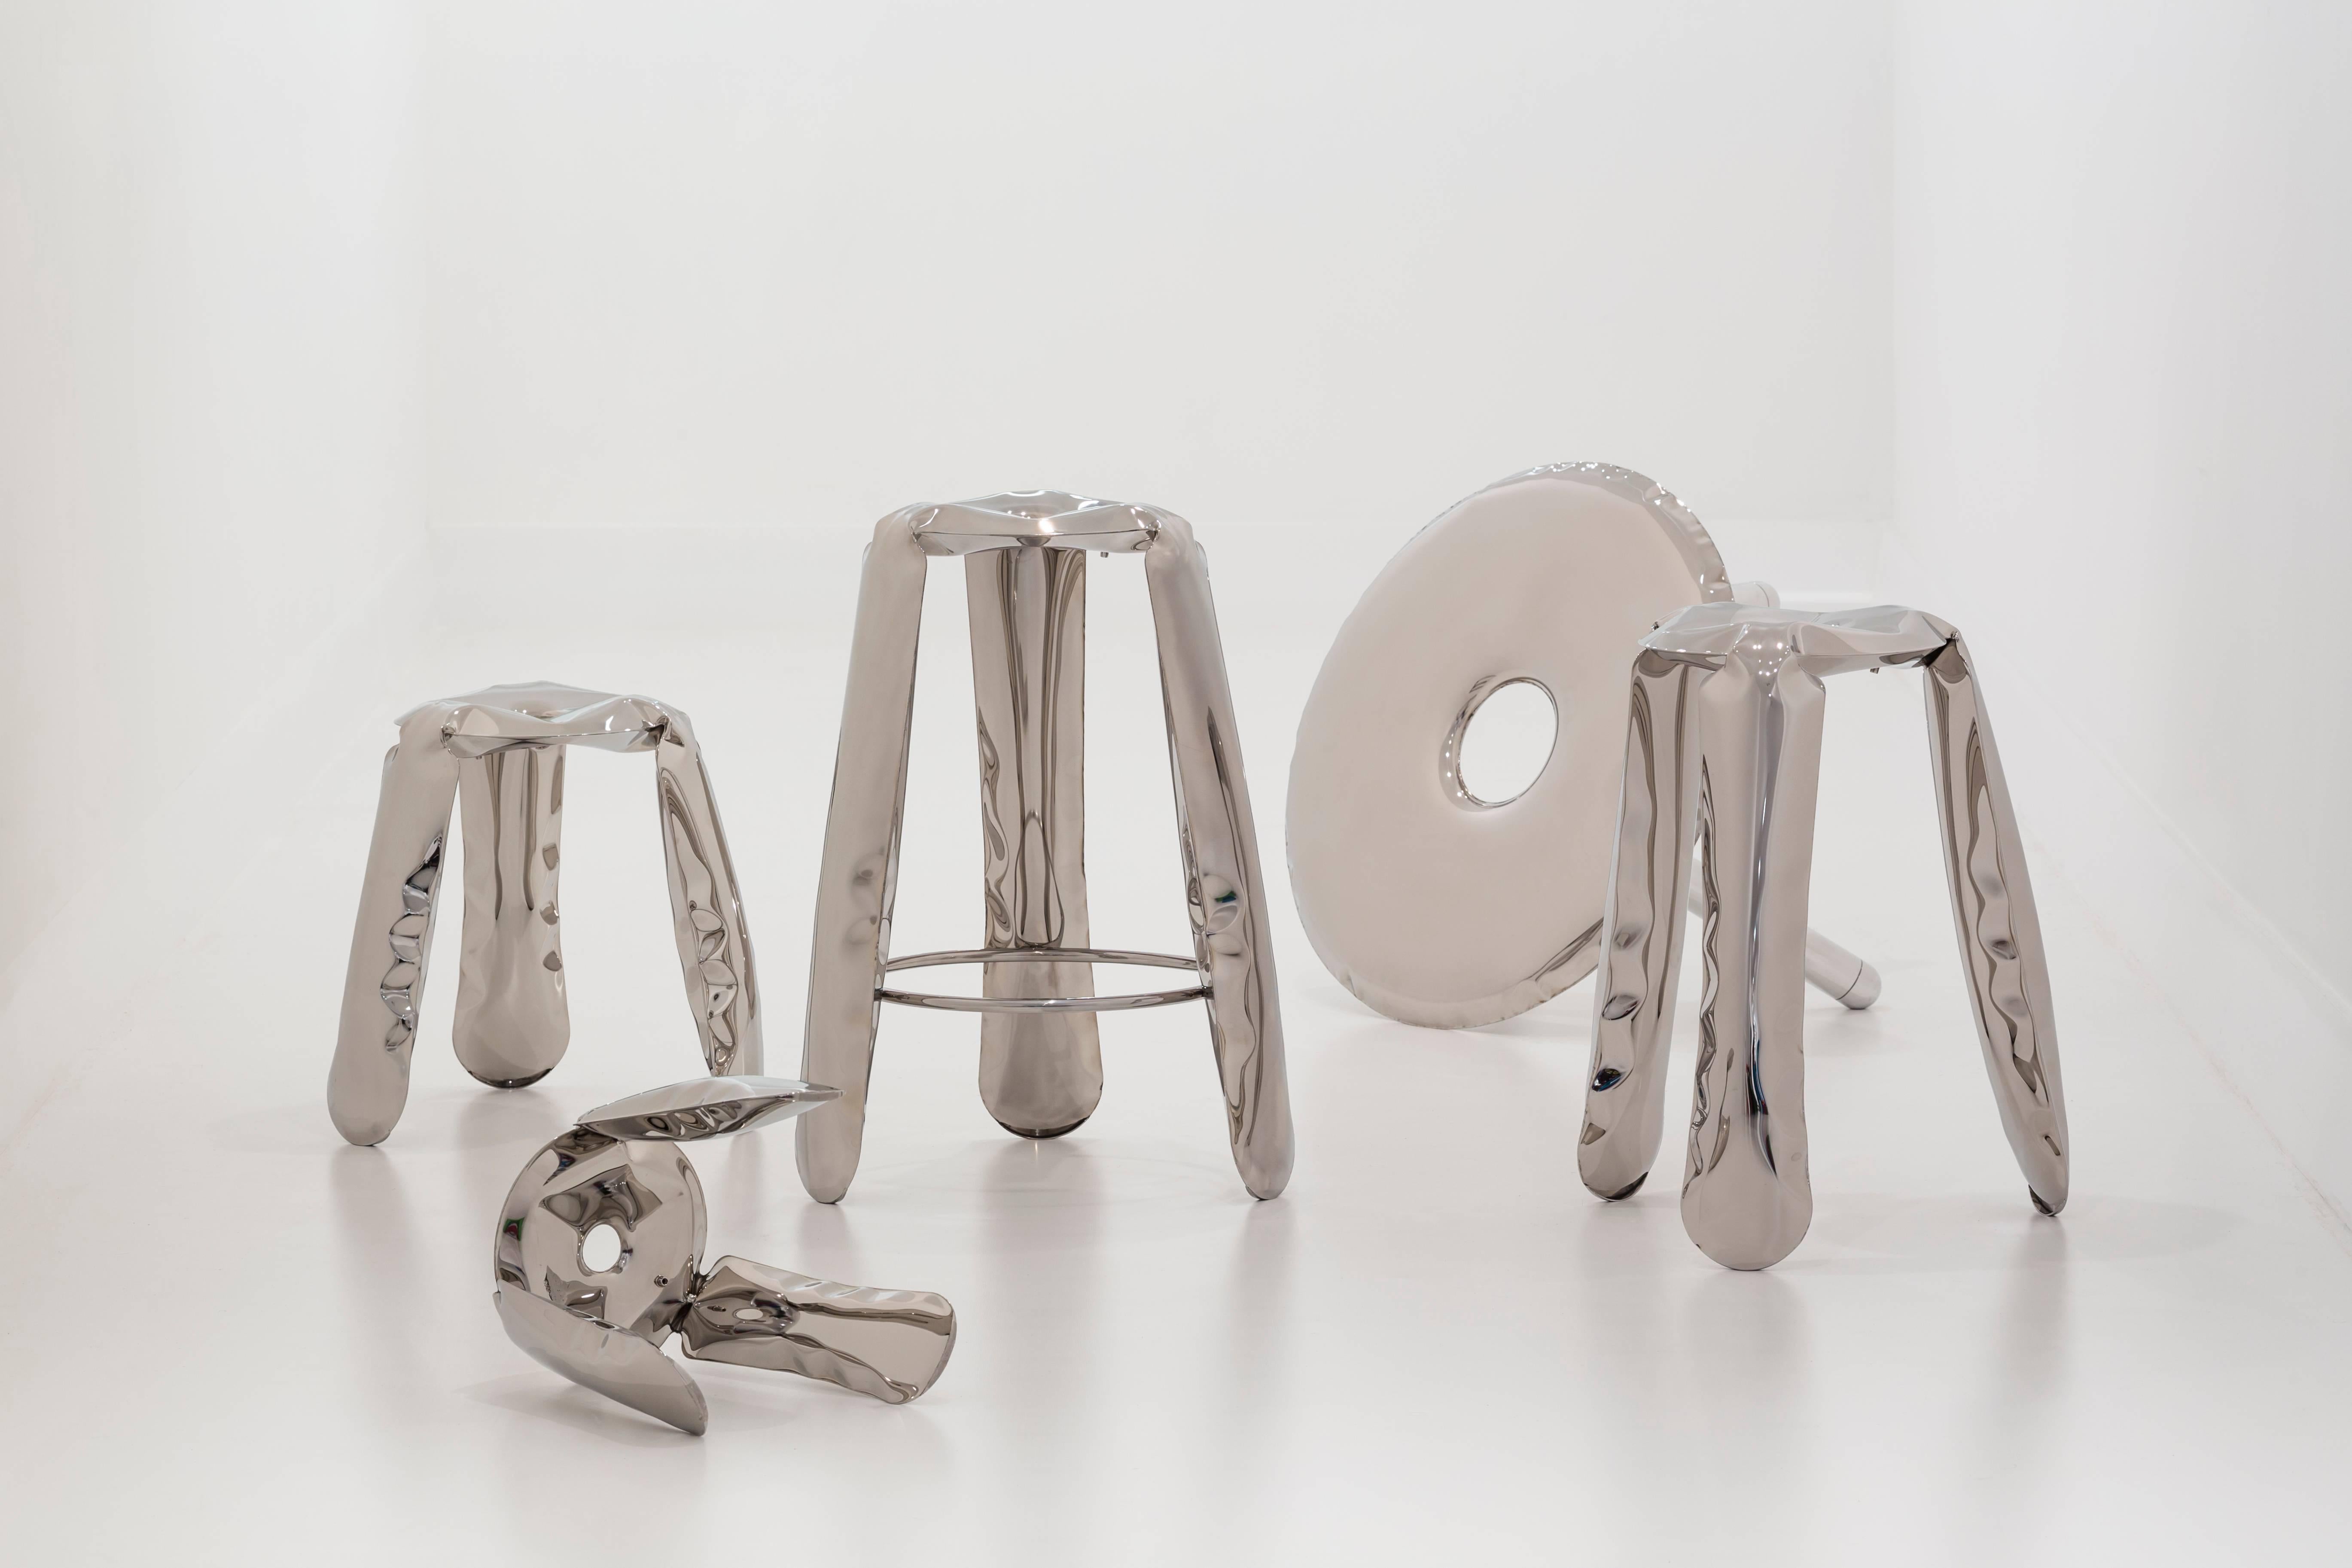 Industrial Plopp Stool 'Mini' by Zieta Prozessdesign, Stainless Steel ‘Inox’ Version For Sale